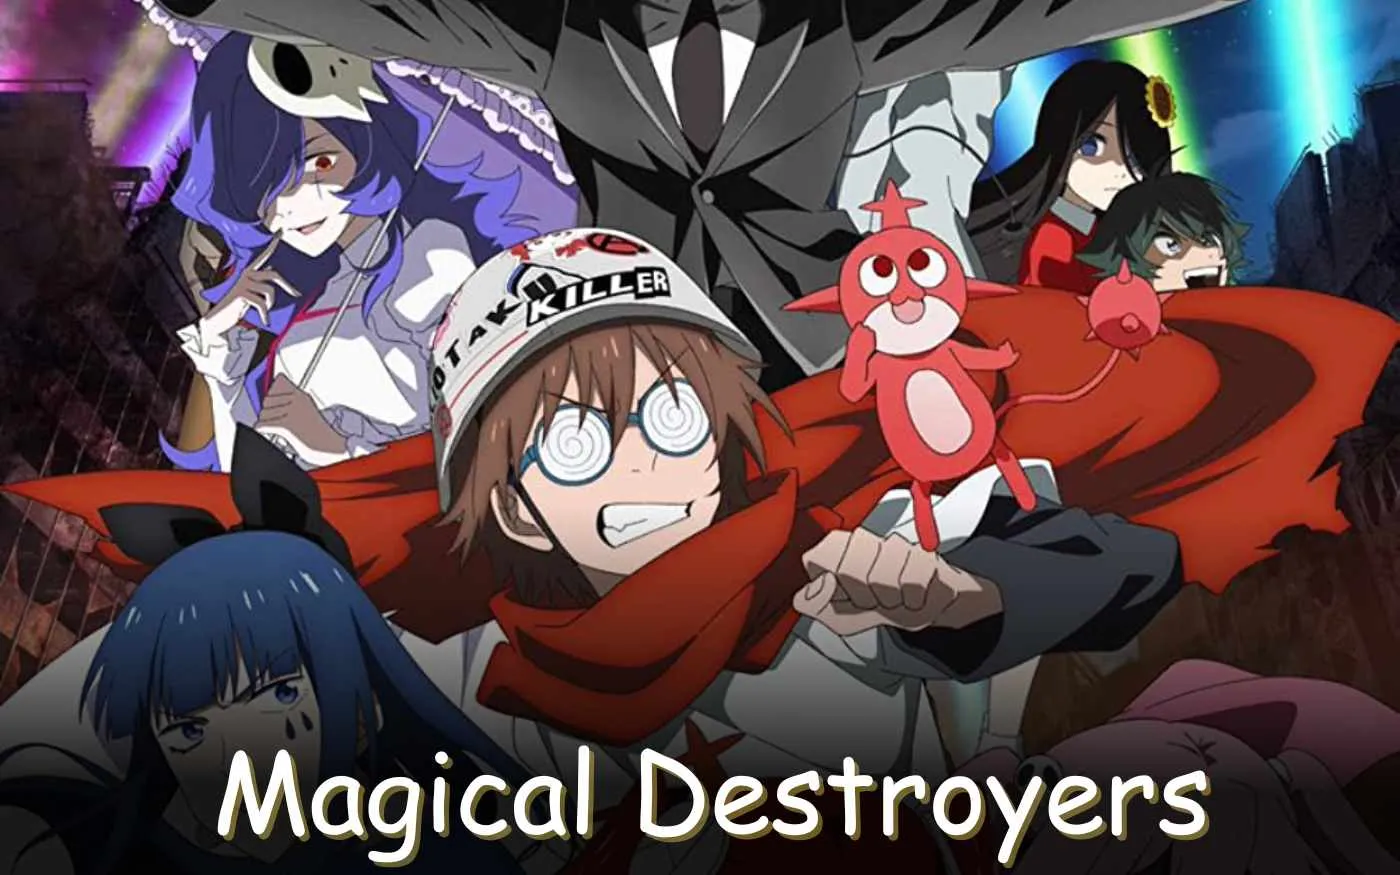 Magical Destroyers Season 2 Release Date, Trailer